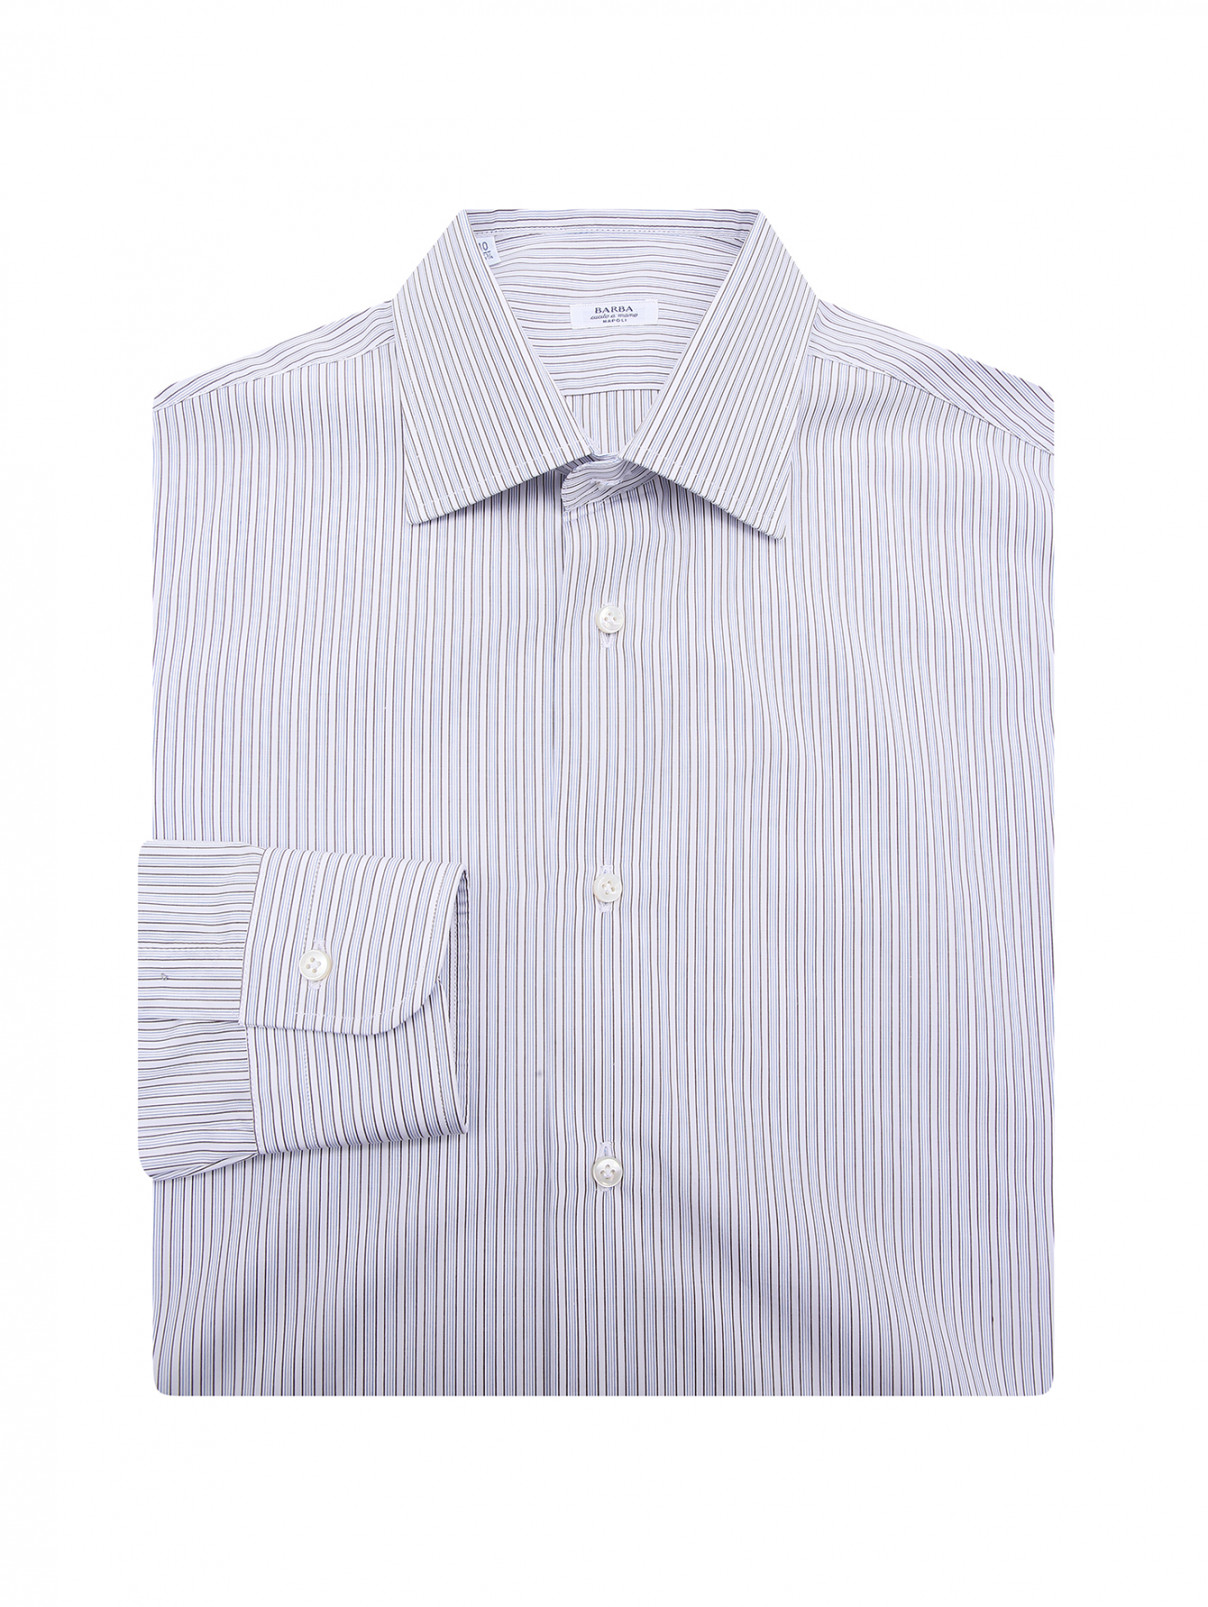 Приталенная рубашка Barba Napoli  –  Общий вид  – Цвет:  Белый